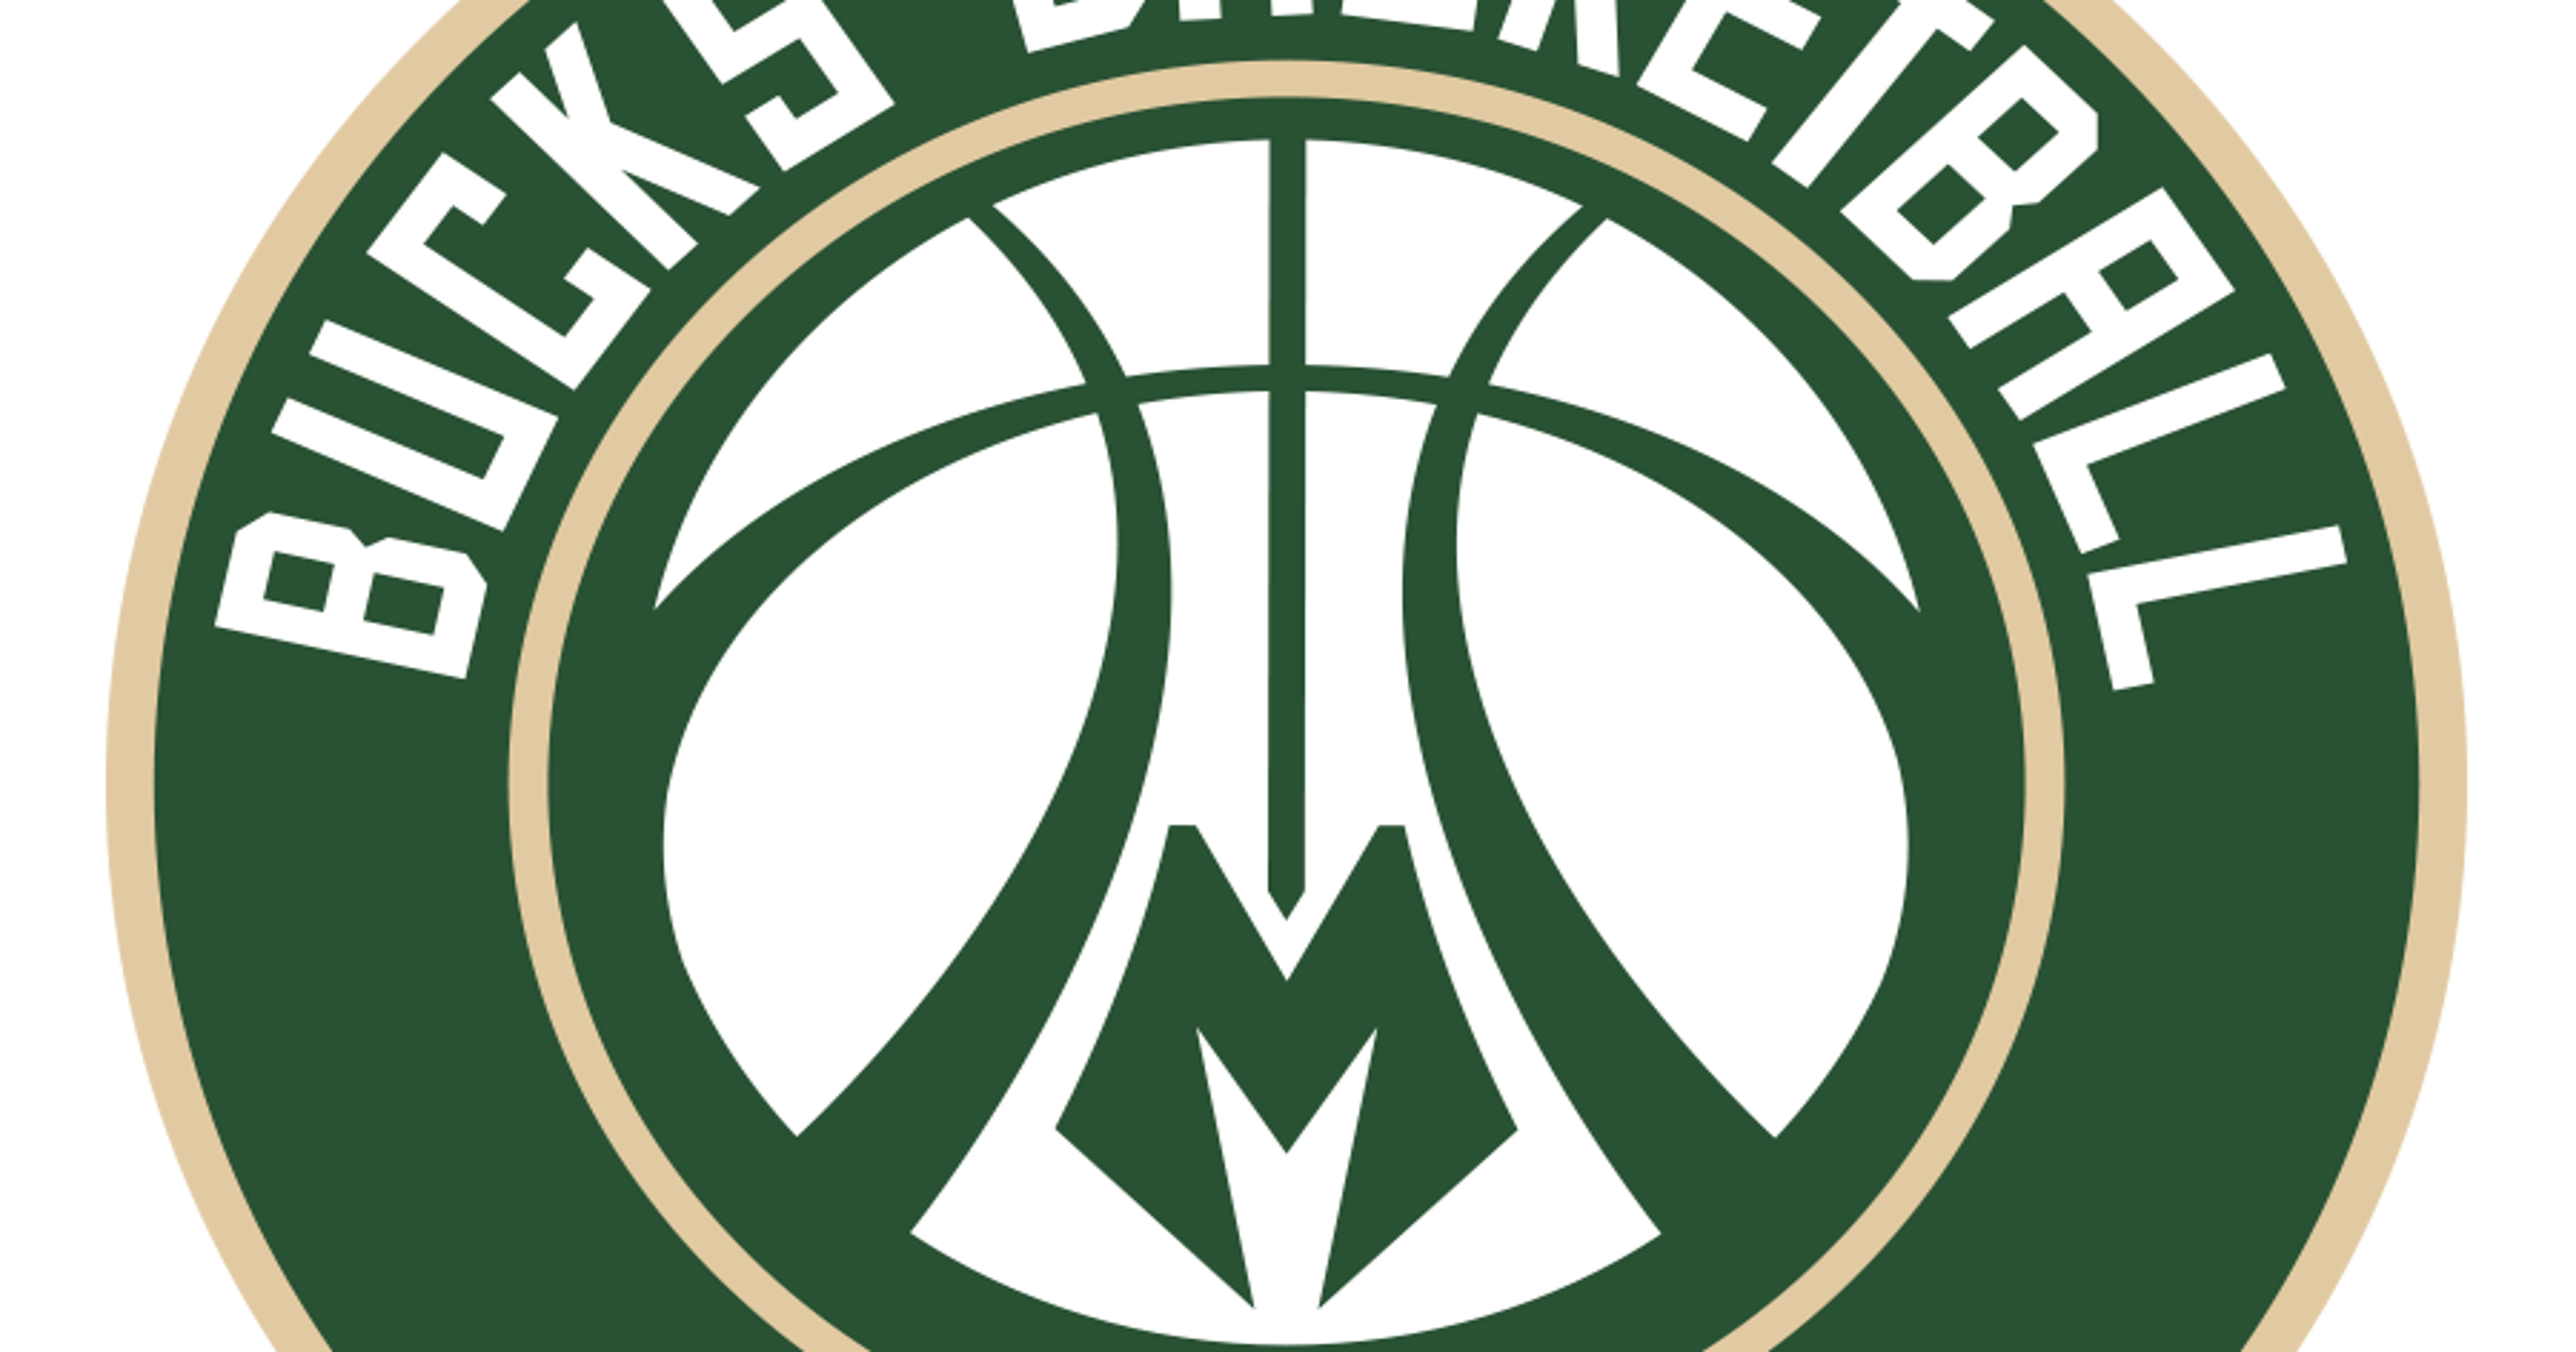 Check out the Milwaukee Bucks' new logos